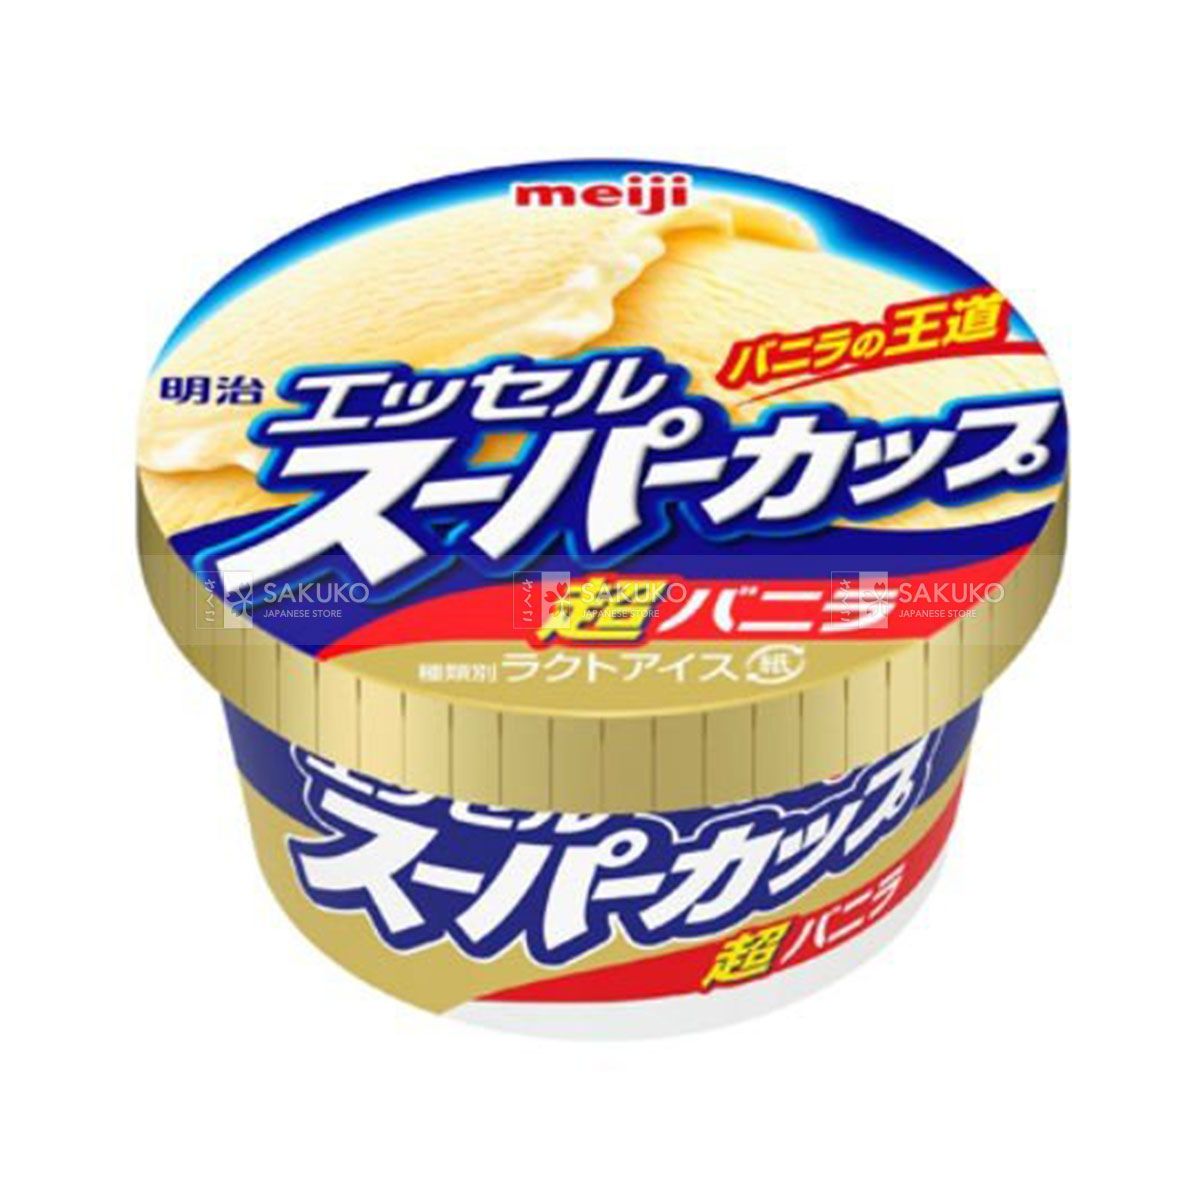  MEIJI- Kem hộp Super Cup vị Vanilla 200ml 